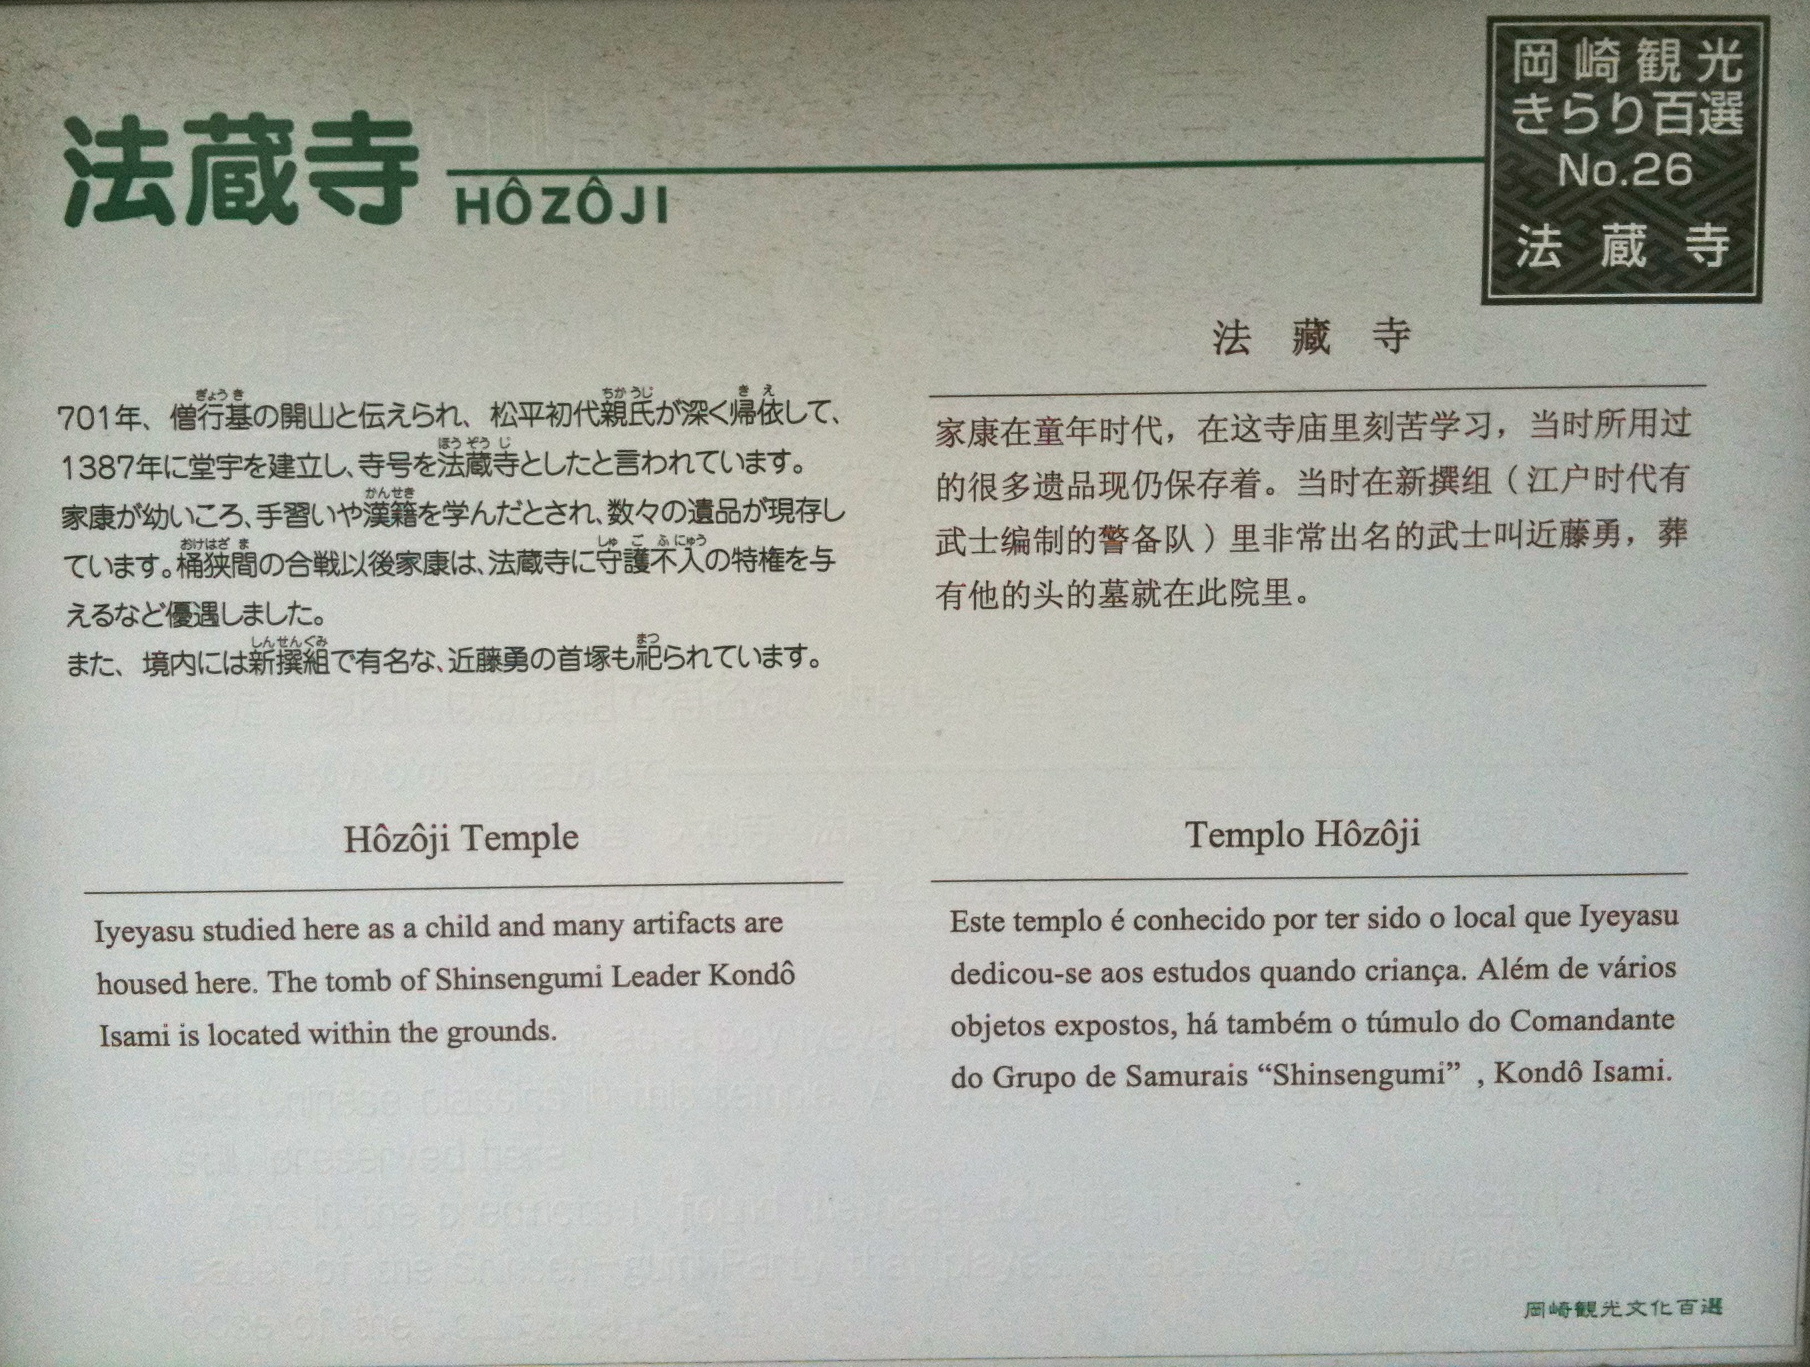 Hozoji Temple information